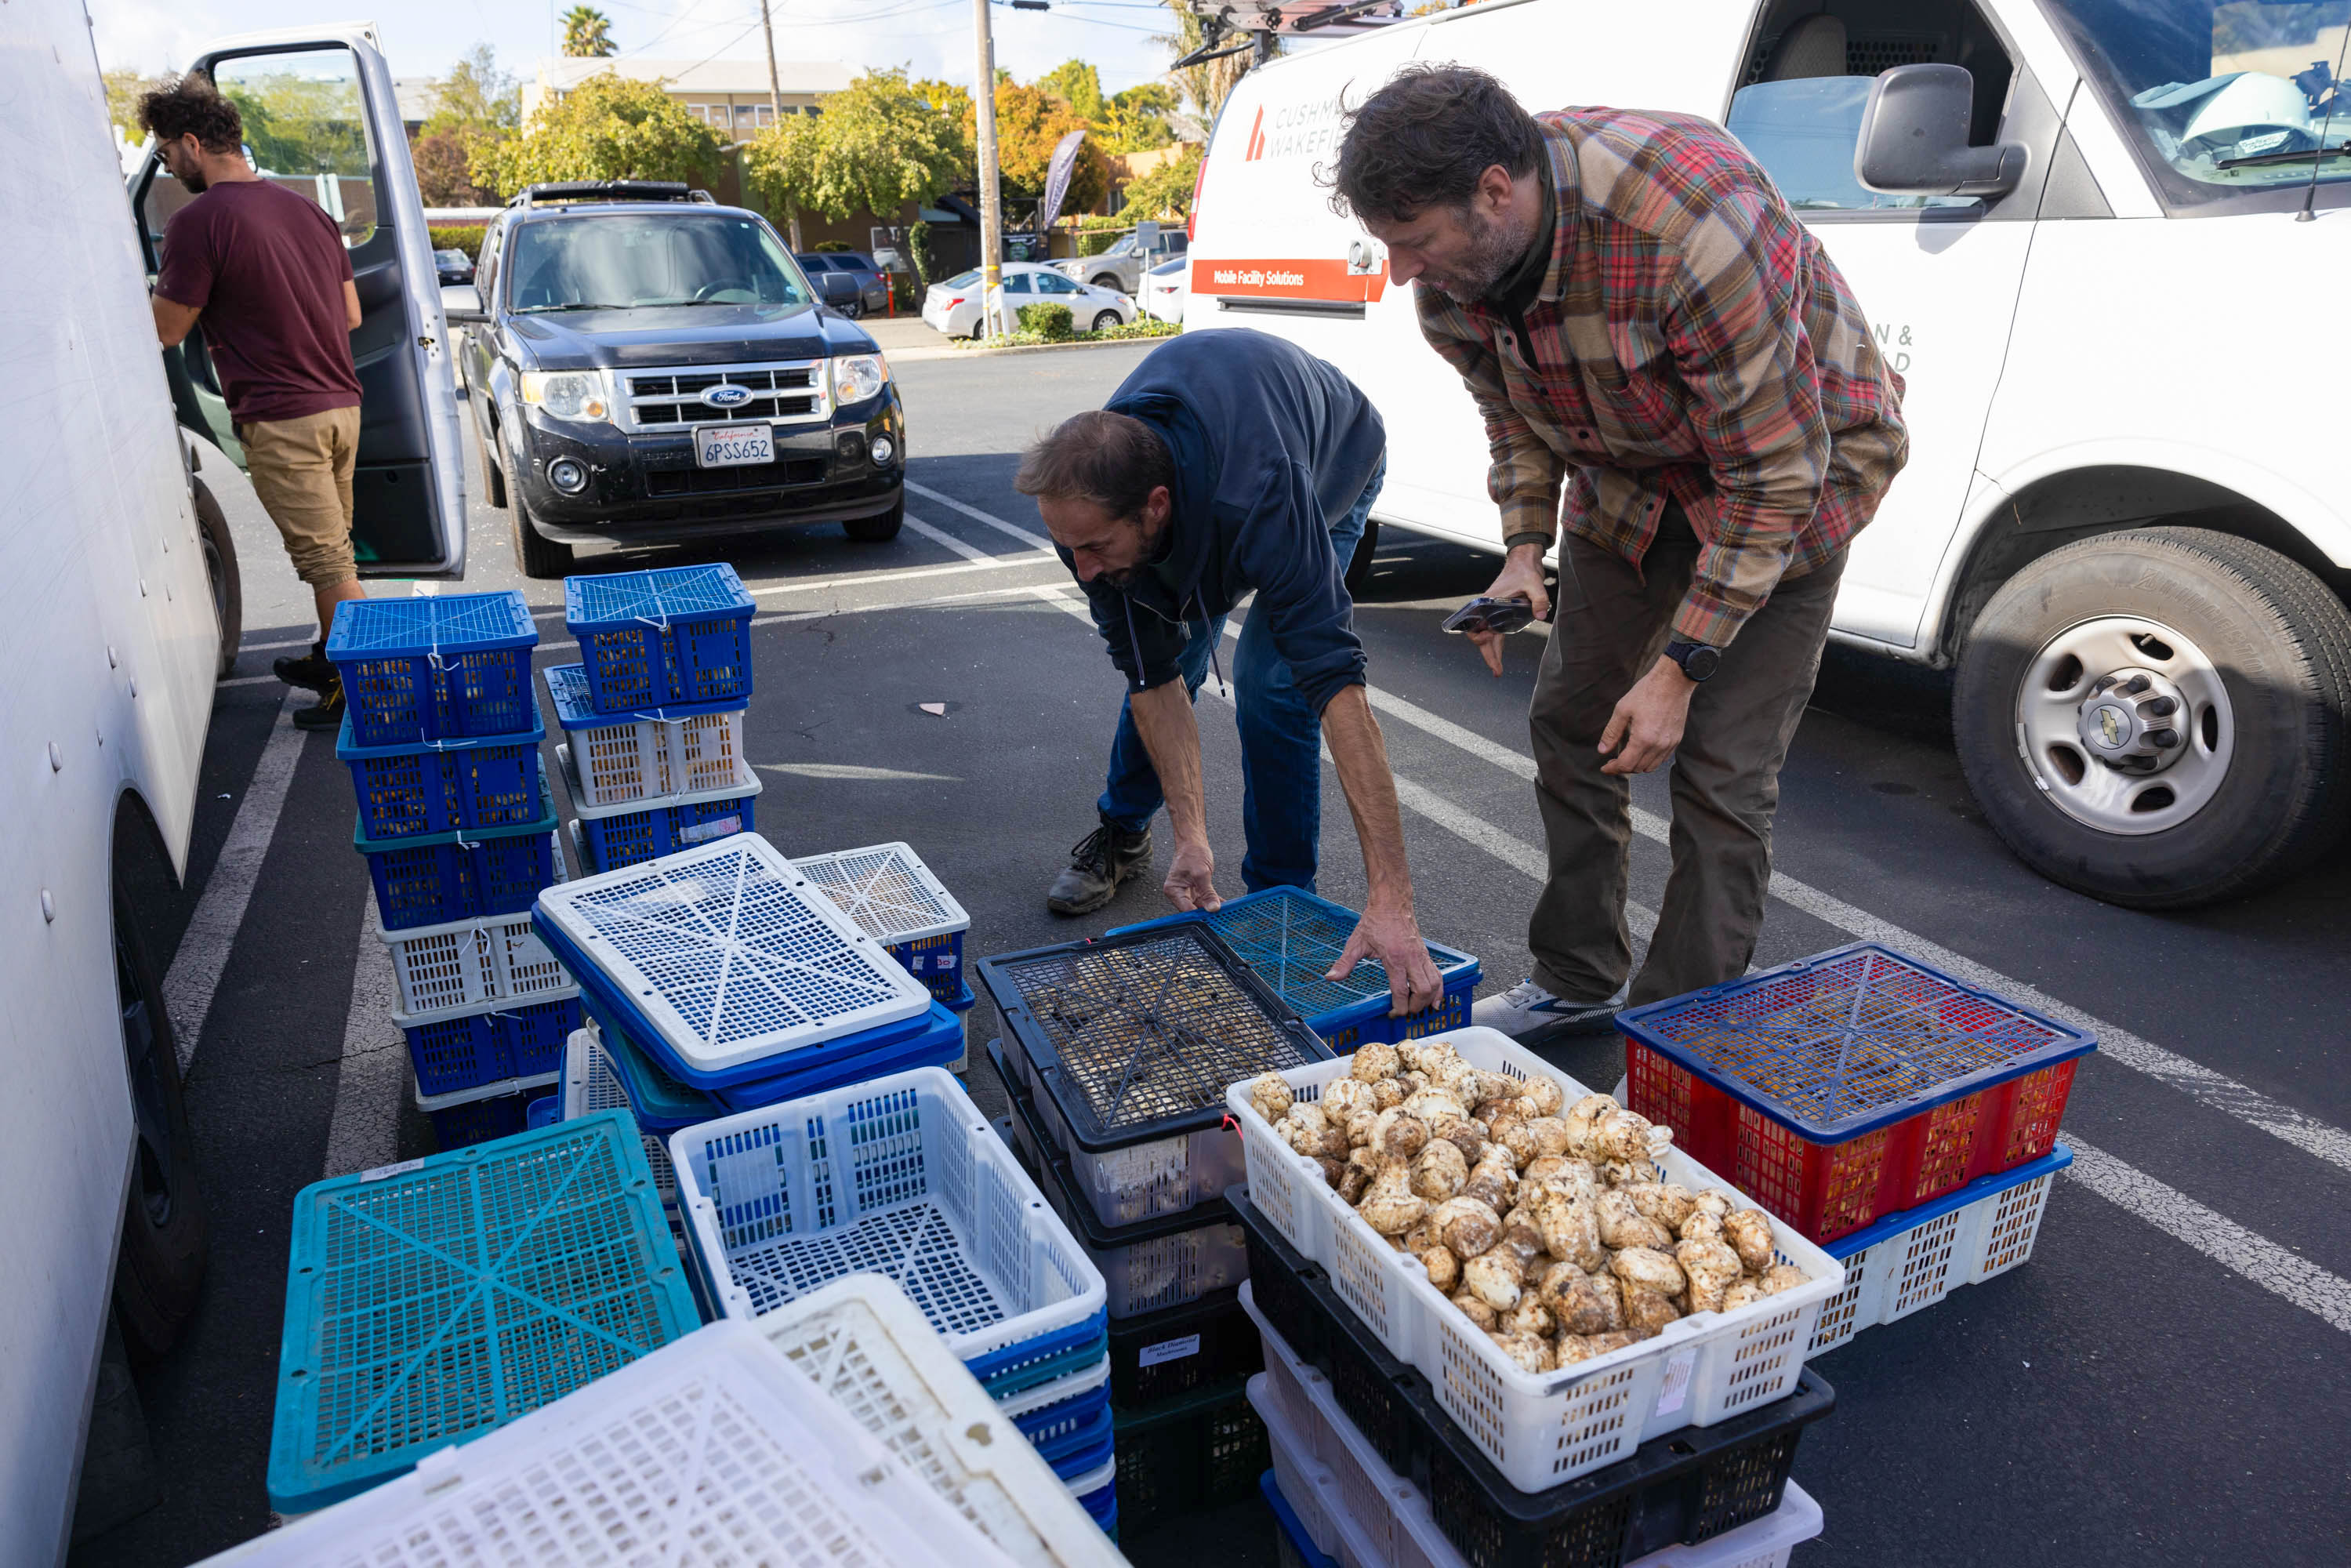 Two men sort through bins of mushrooms in the parking lot